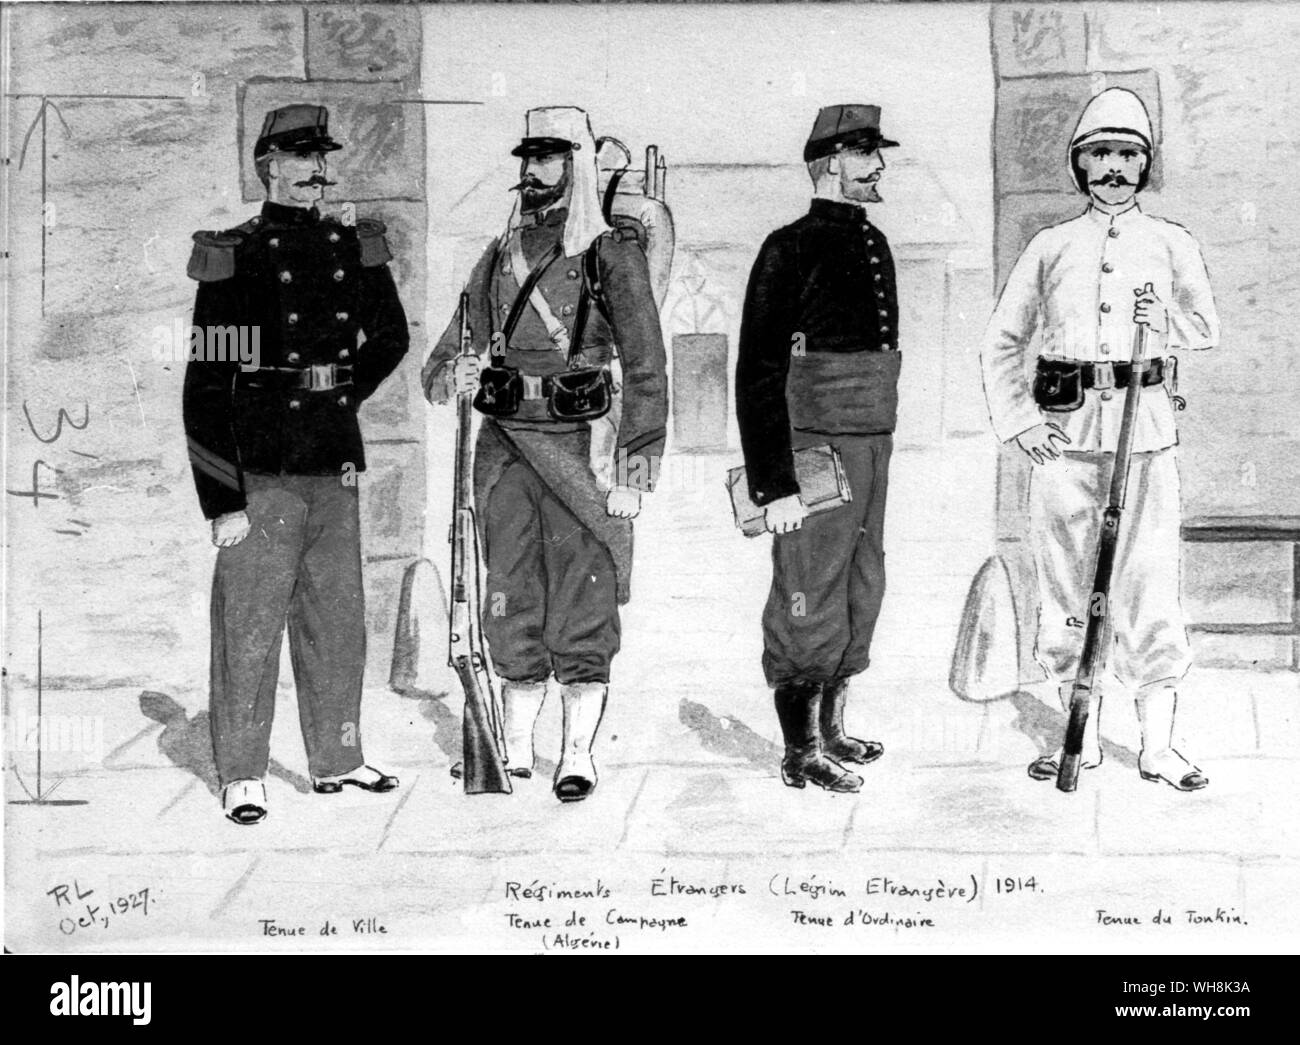 Legion uniform of the early twentieth century (left to right) dress uniform. battle dress (Algeria). service uniform (1914). service uniform (Tonkin). Stock Photo